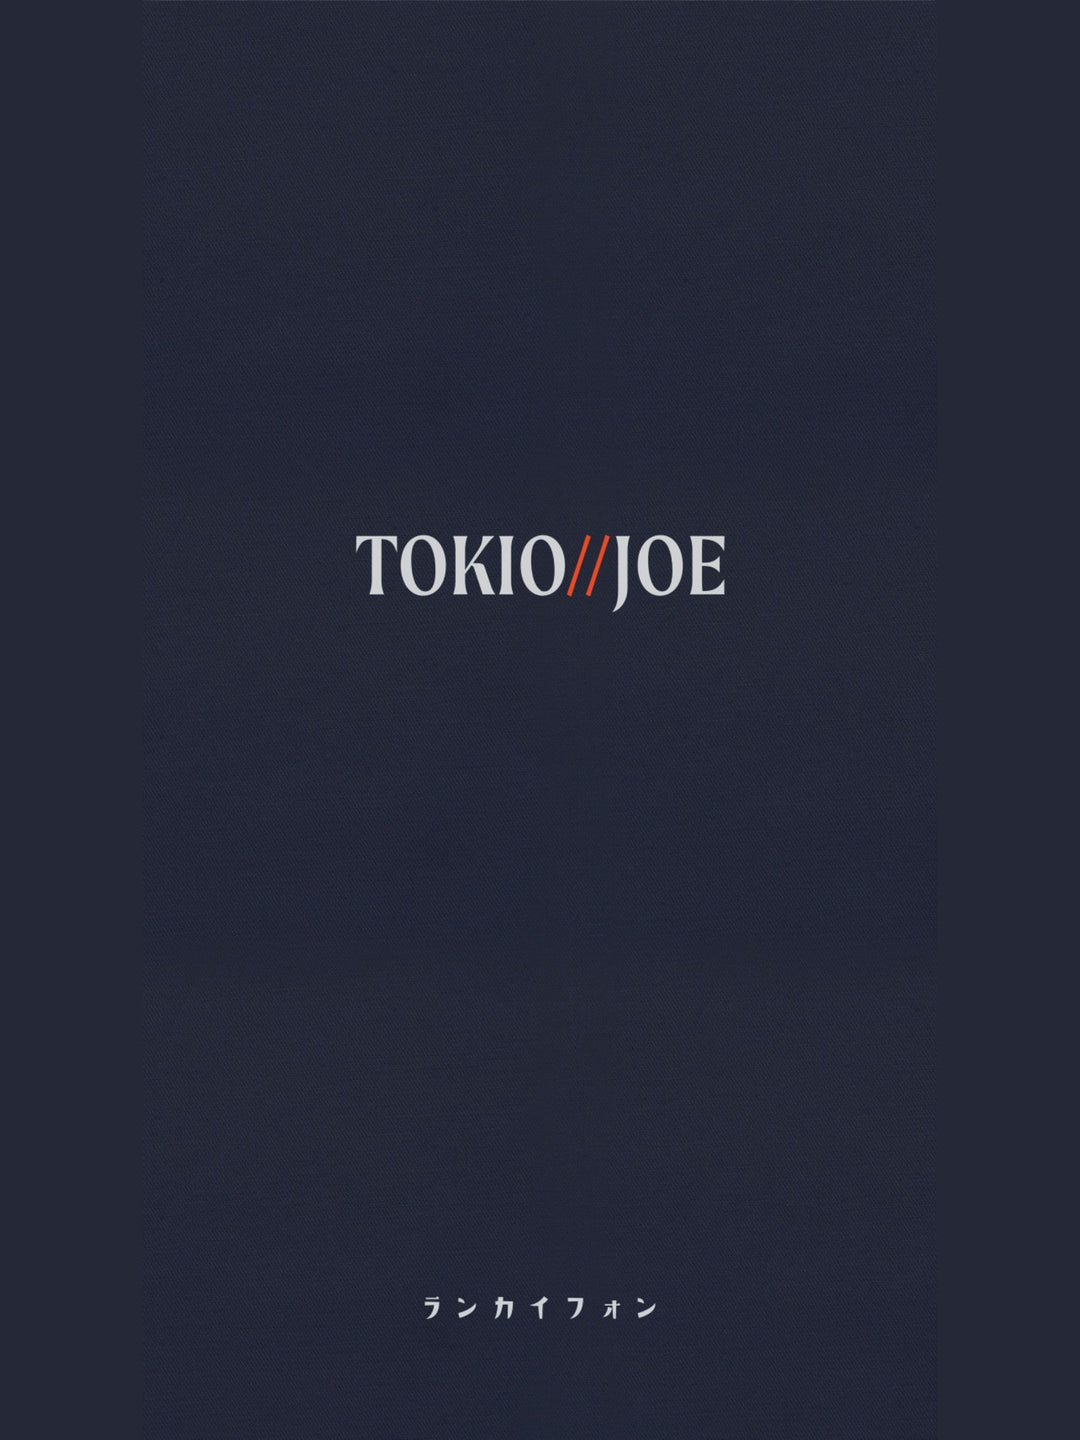 Tokio Joe À La Carte Menu